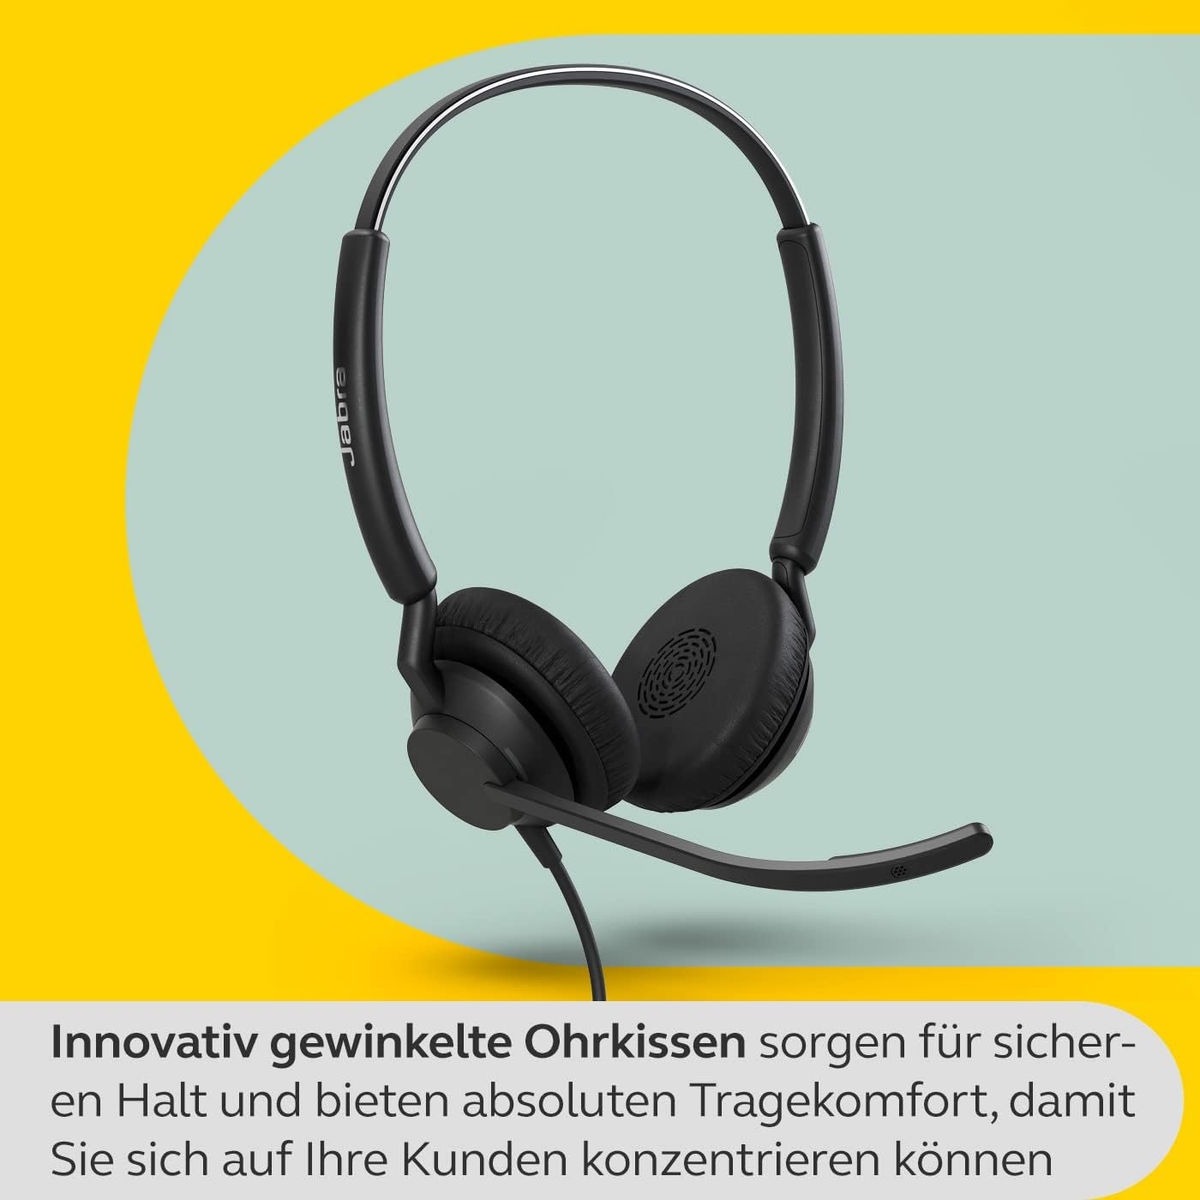 Bluetooth On-ear Coinvolgi 40, JABRA kopfhörer Schwarz